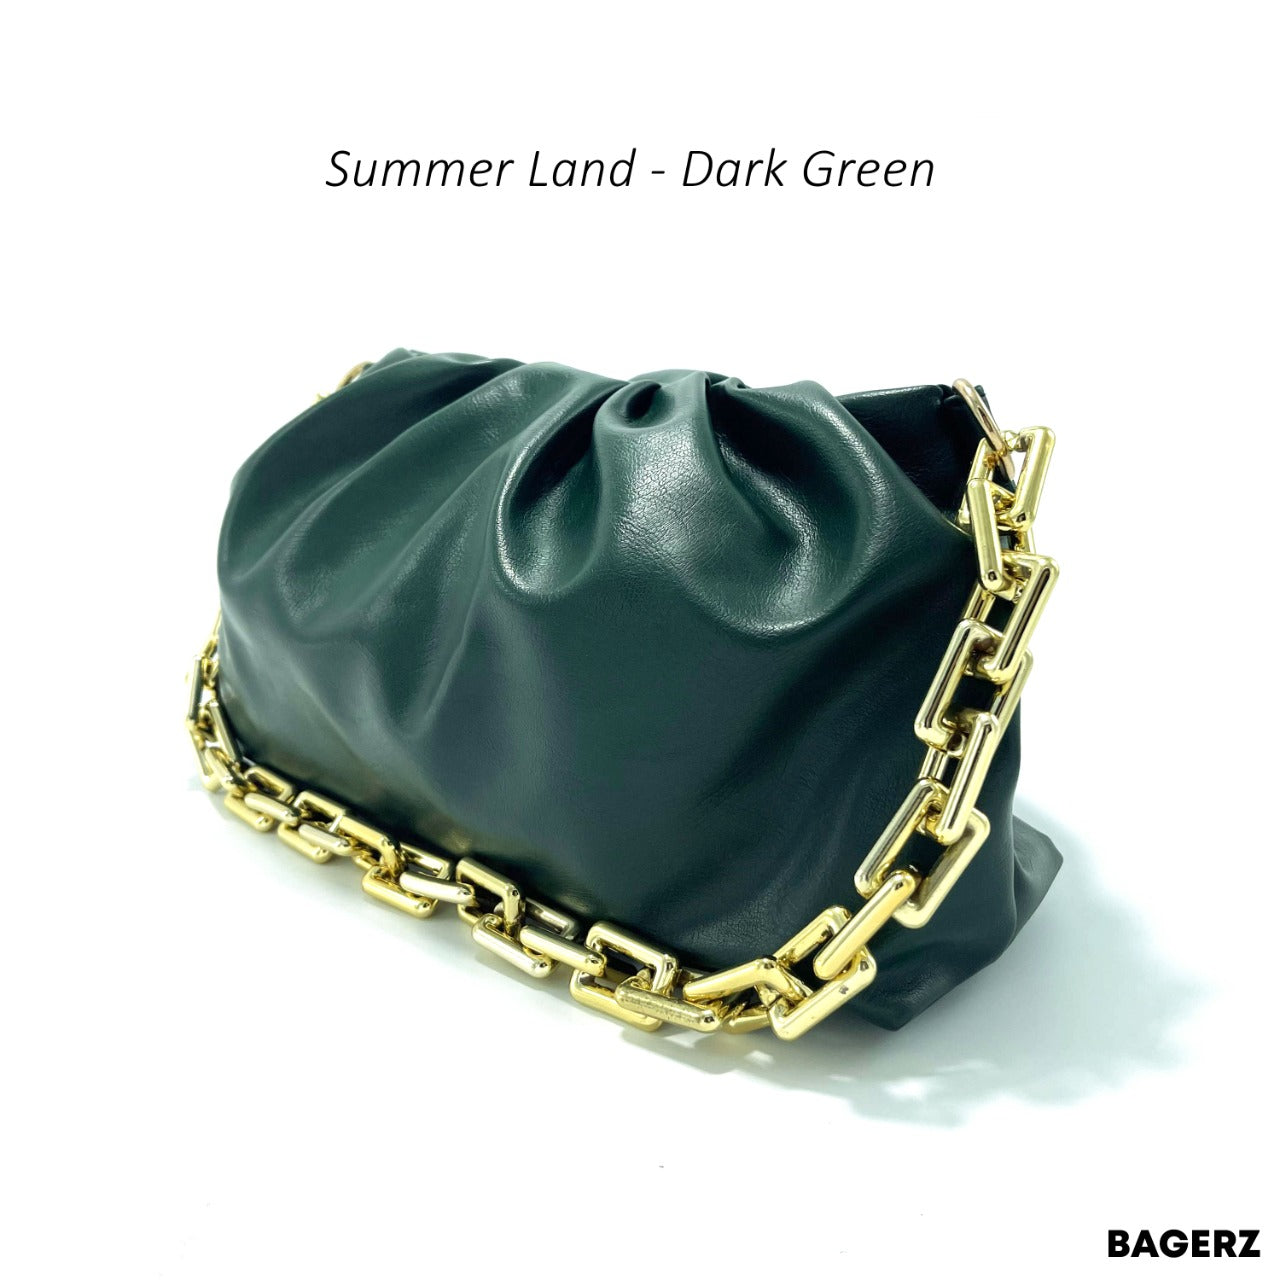 Summer Land - Dark Green